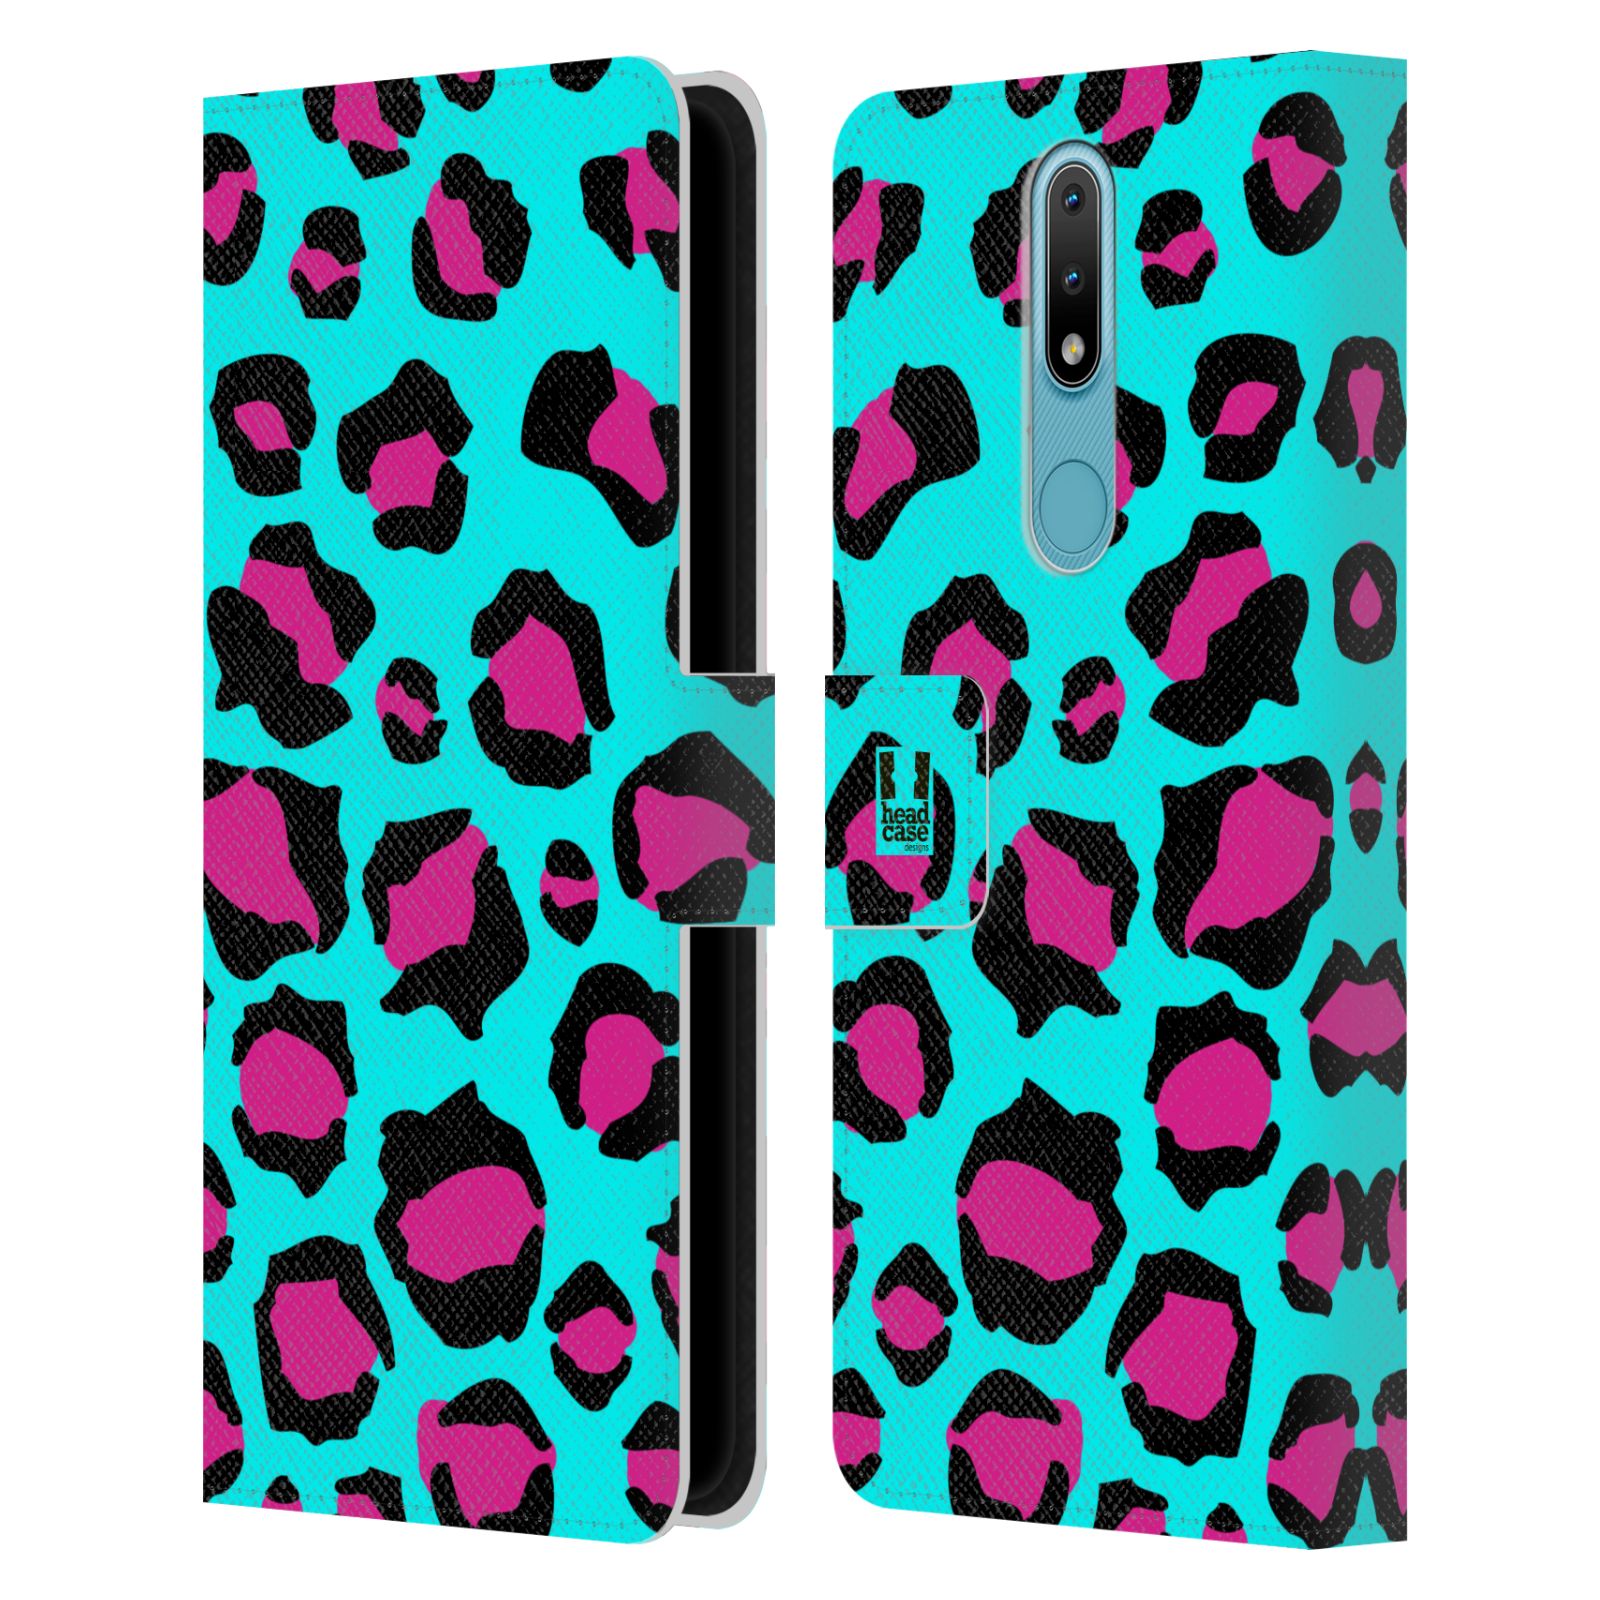 Pouzdro HEAD CASE na mobil Nokia 2.4 Zvířecí barevné vzory tyrkysový leopard